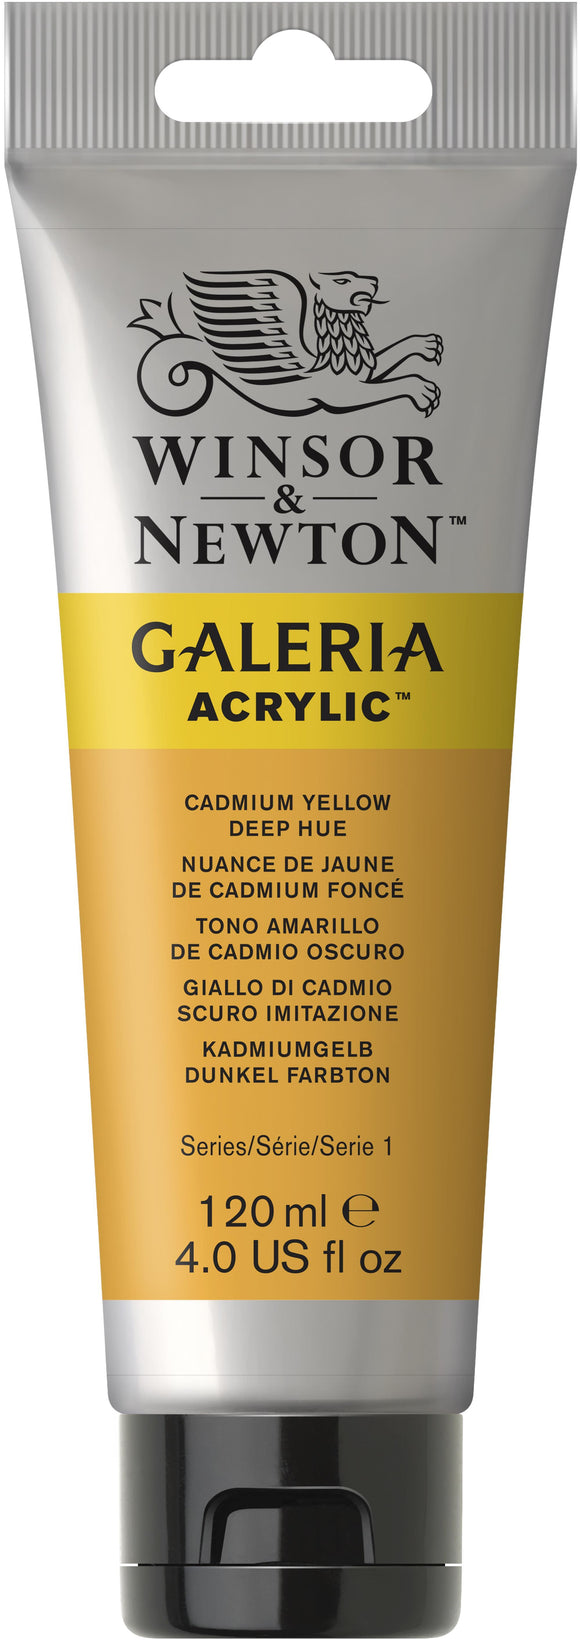 Winsor & Newton Galeria Acrylic Cadmium Yellow Deep Hue 120Ml